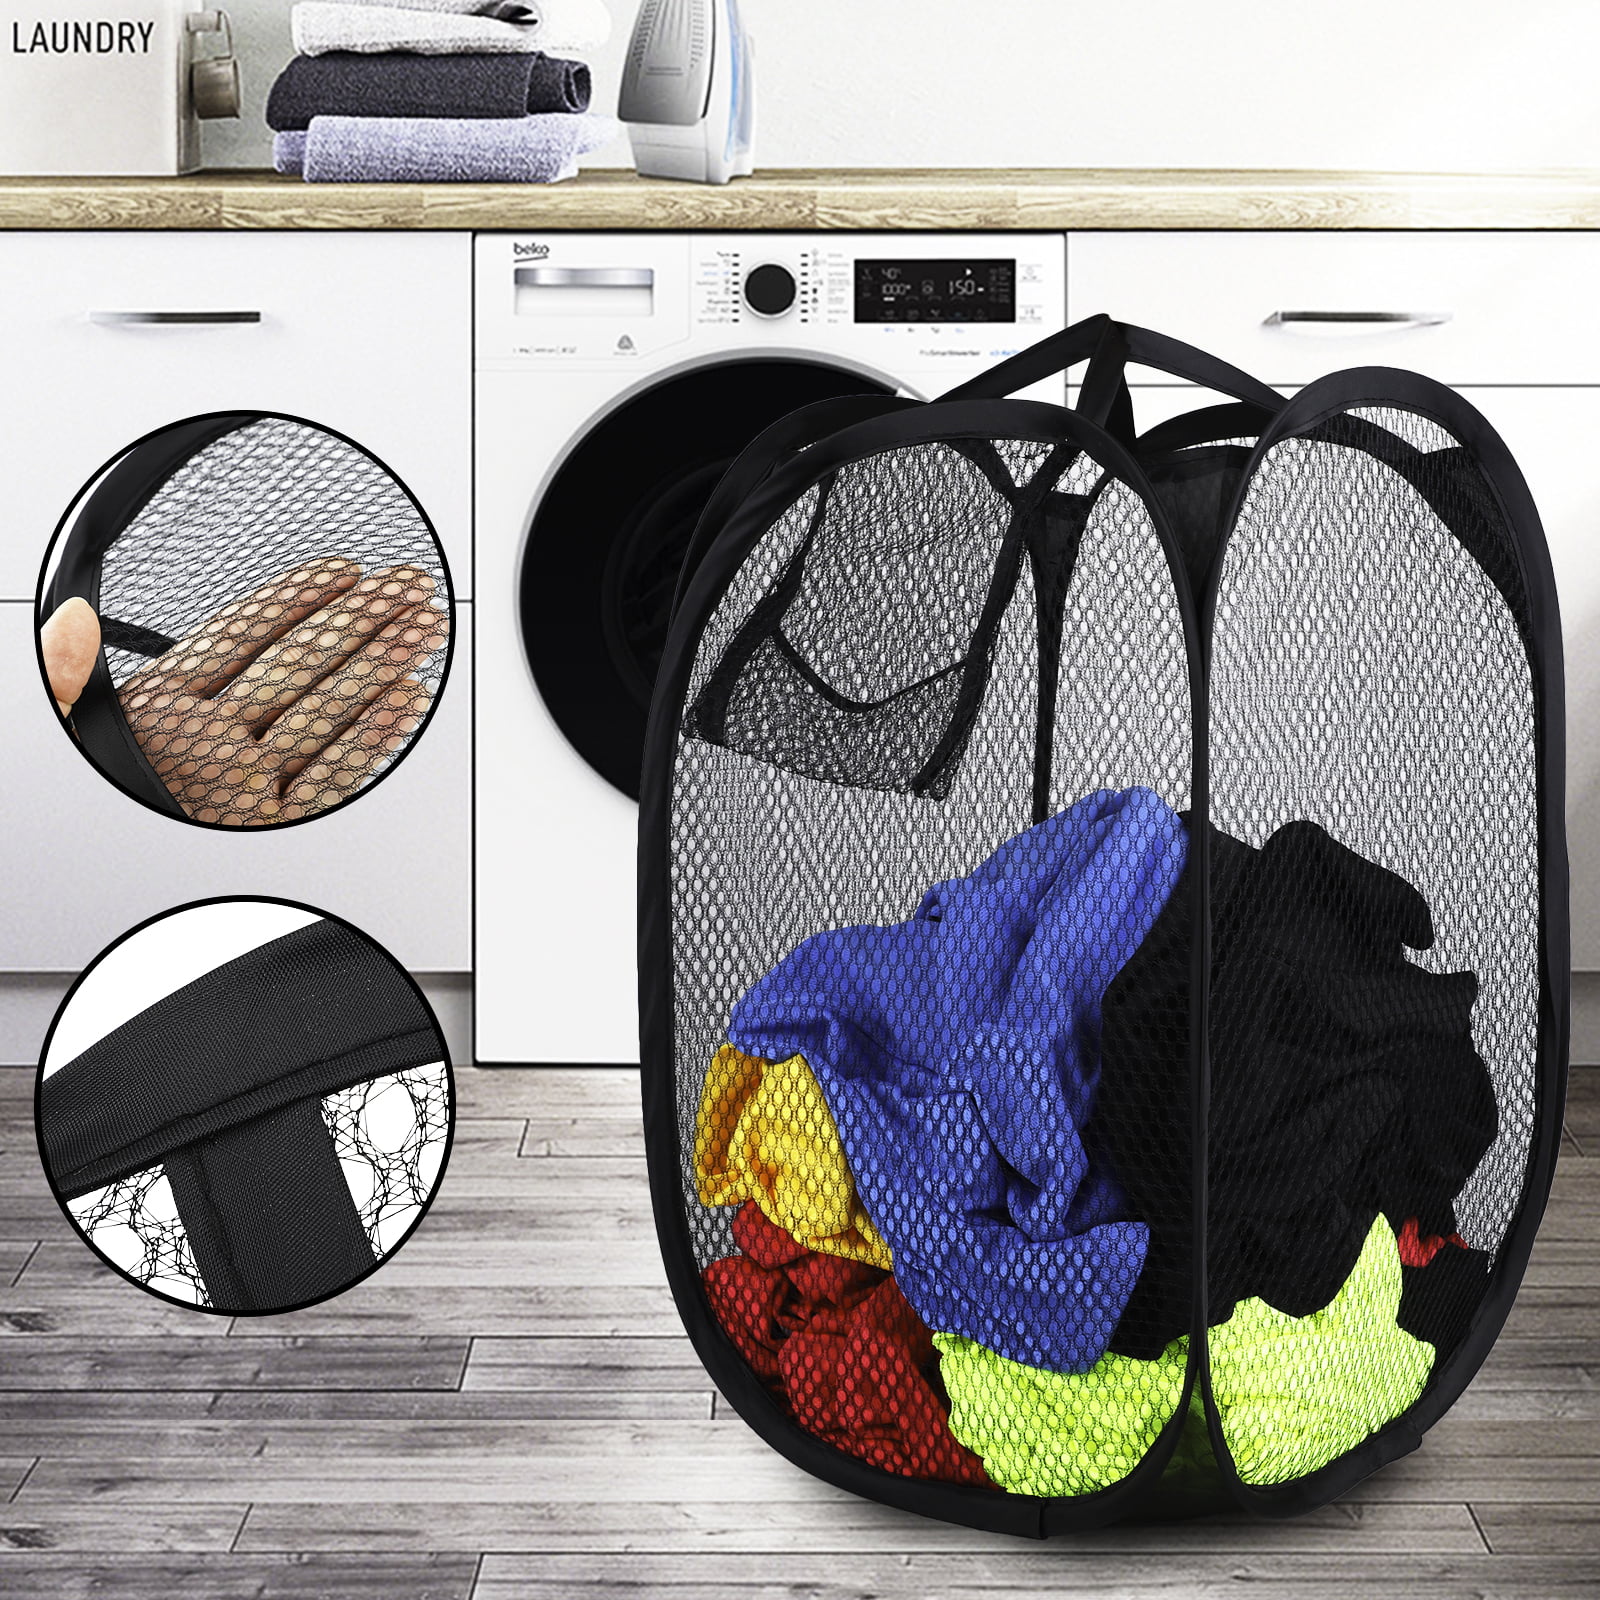 Foldable Pop Up Washing Clothes Laundry Basket Bin Hamper Mesh Storage Bag New 